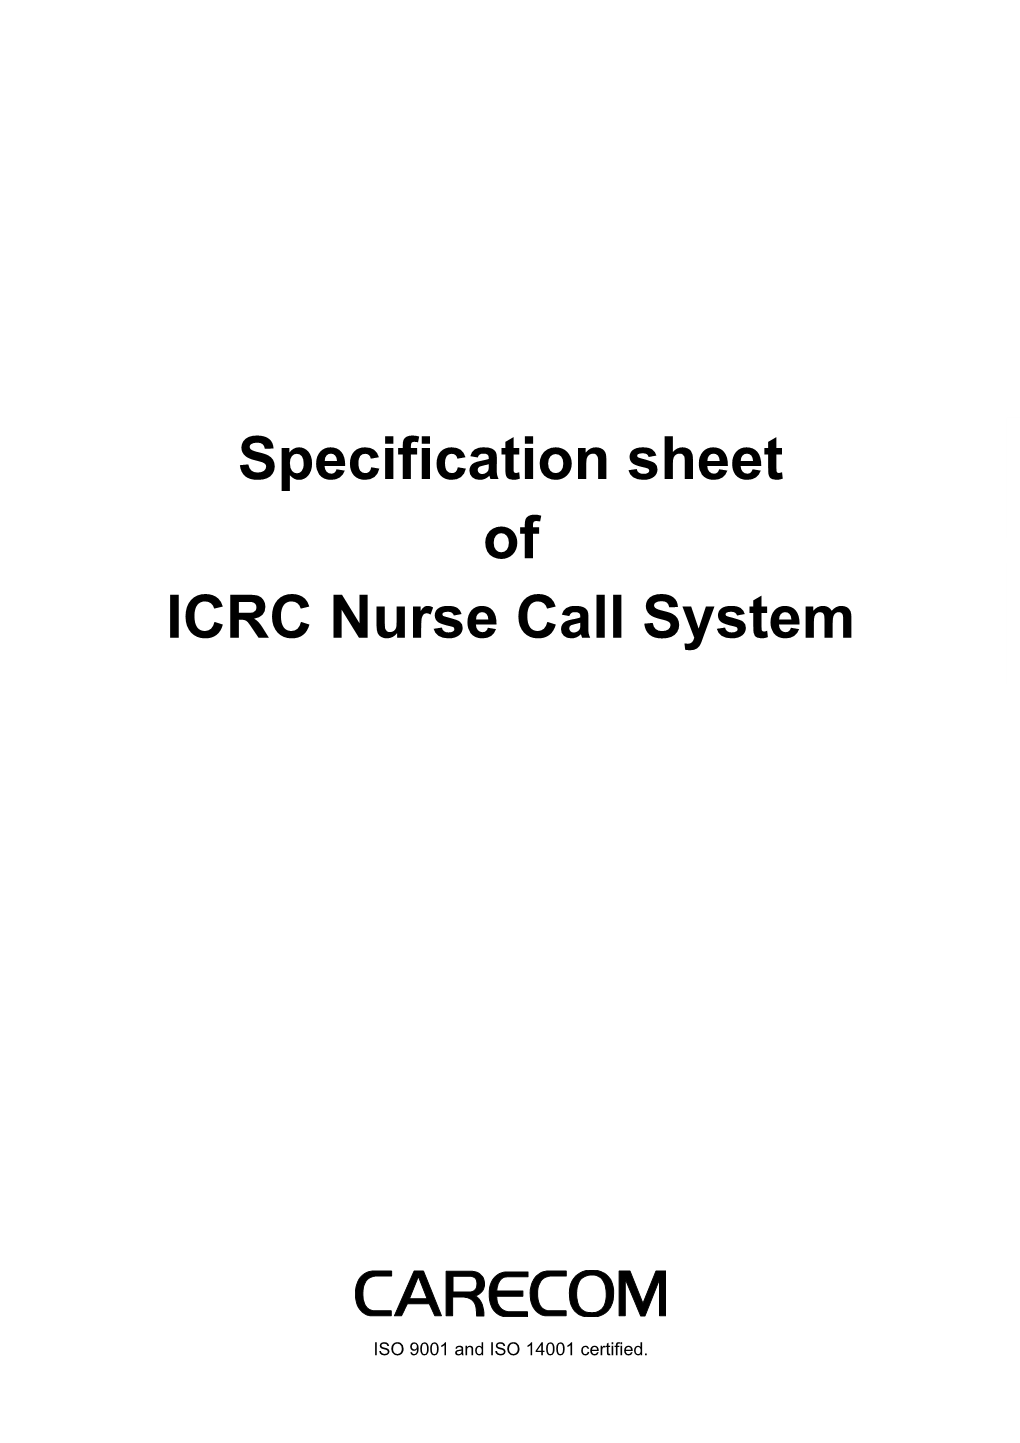 ICRC Nurse Call System